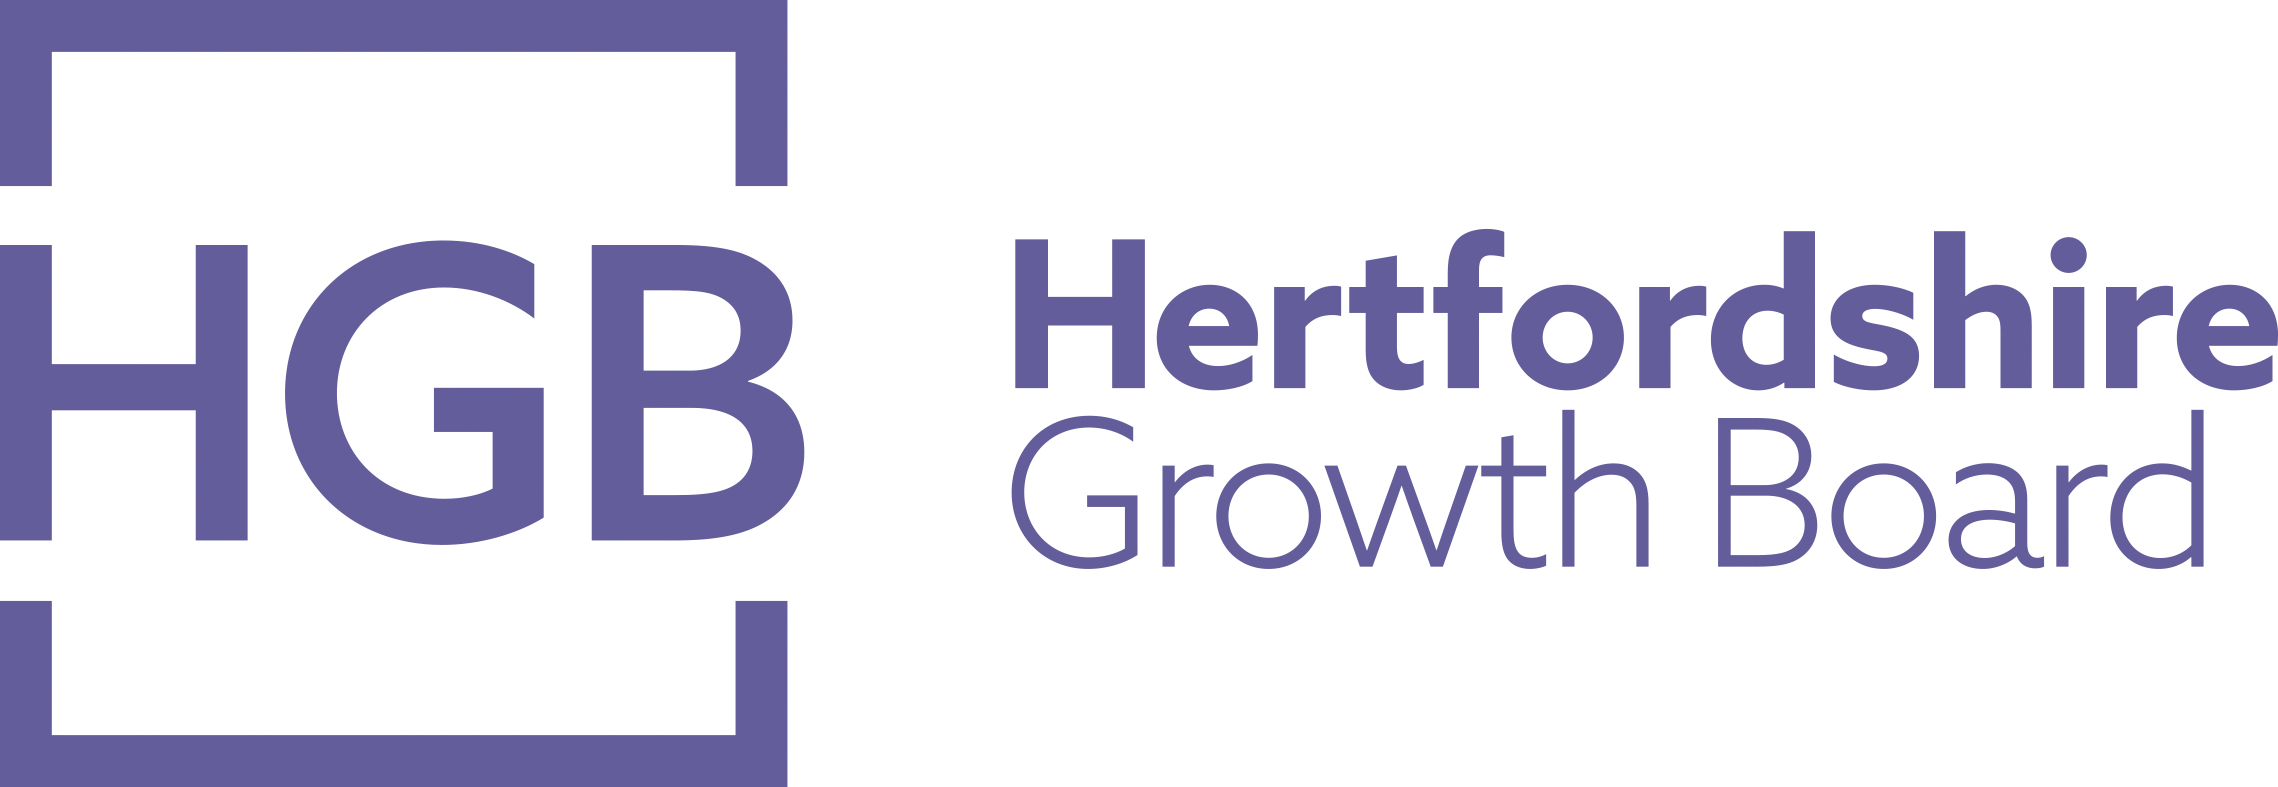 Hertfordshire Growth Board logo